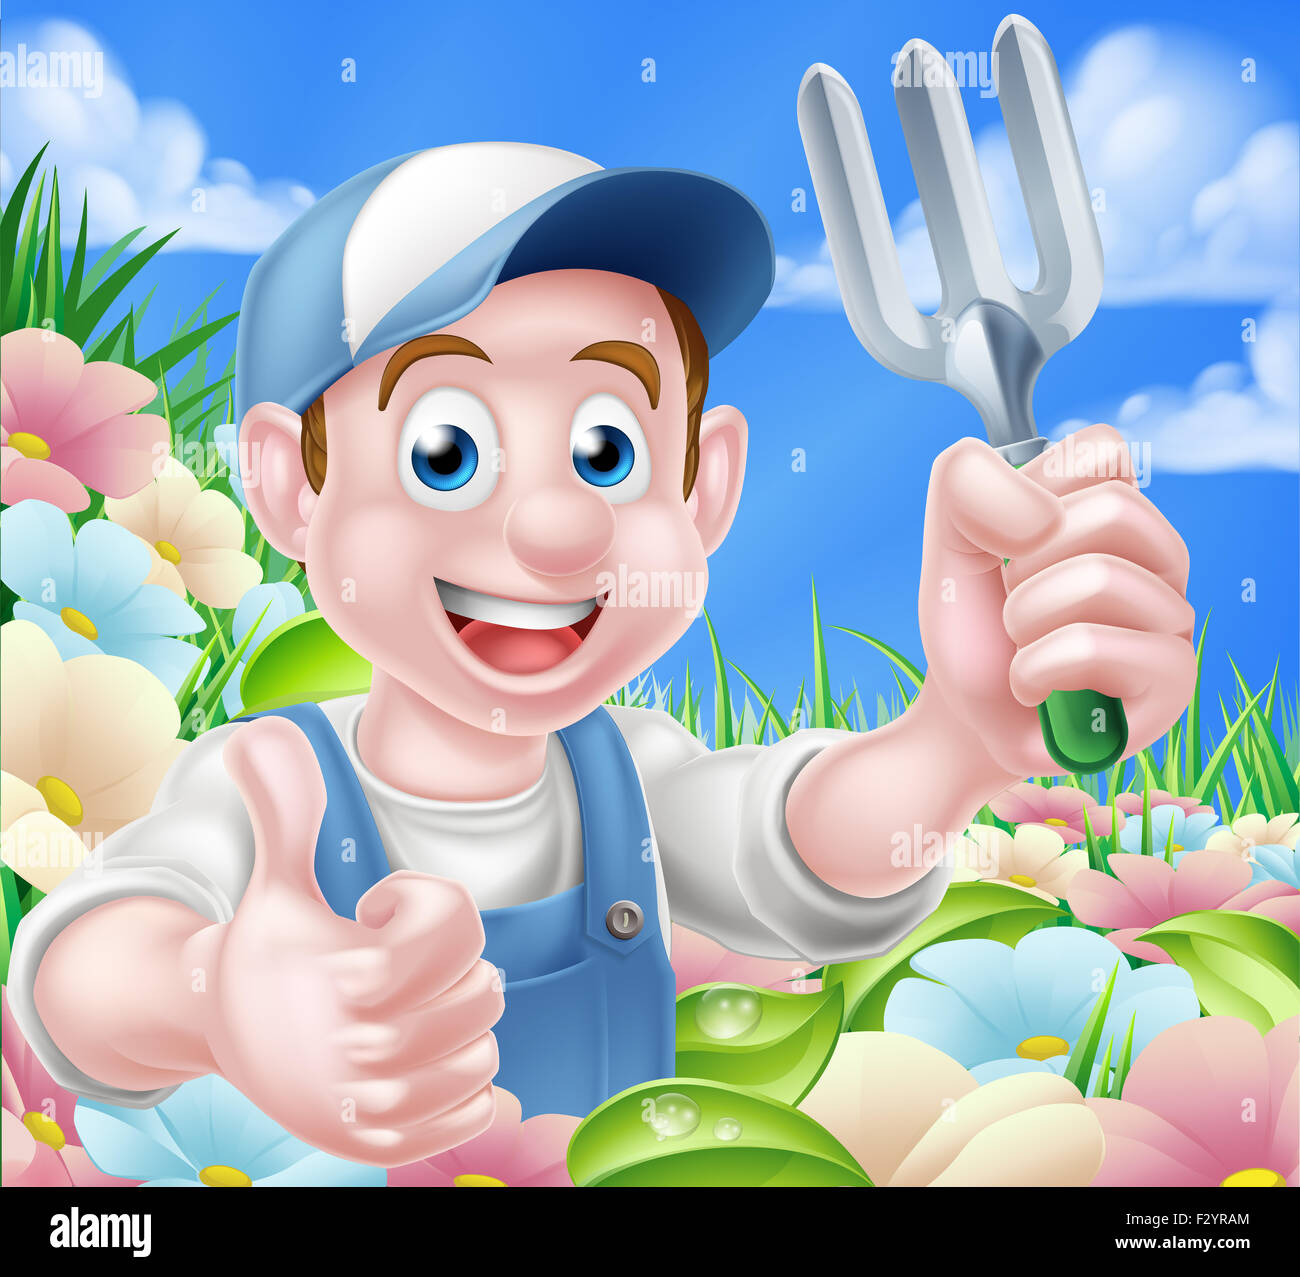 A cartoon gardener character holding a garden fork and giving a thumbs up standing in a flower garden Stock Photo